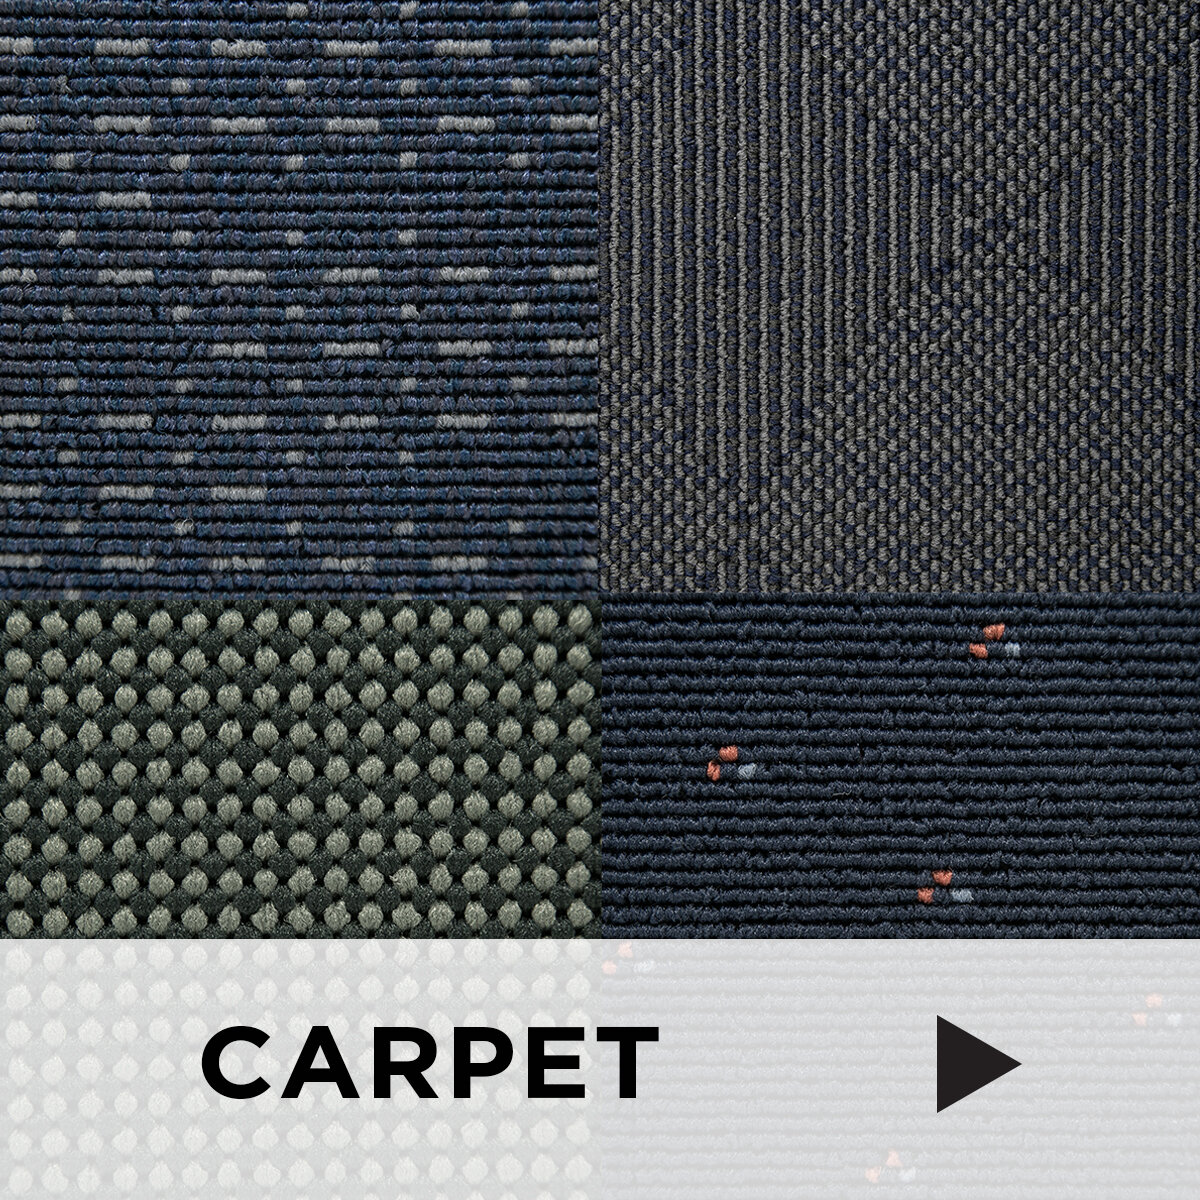 carpet_button.jpg